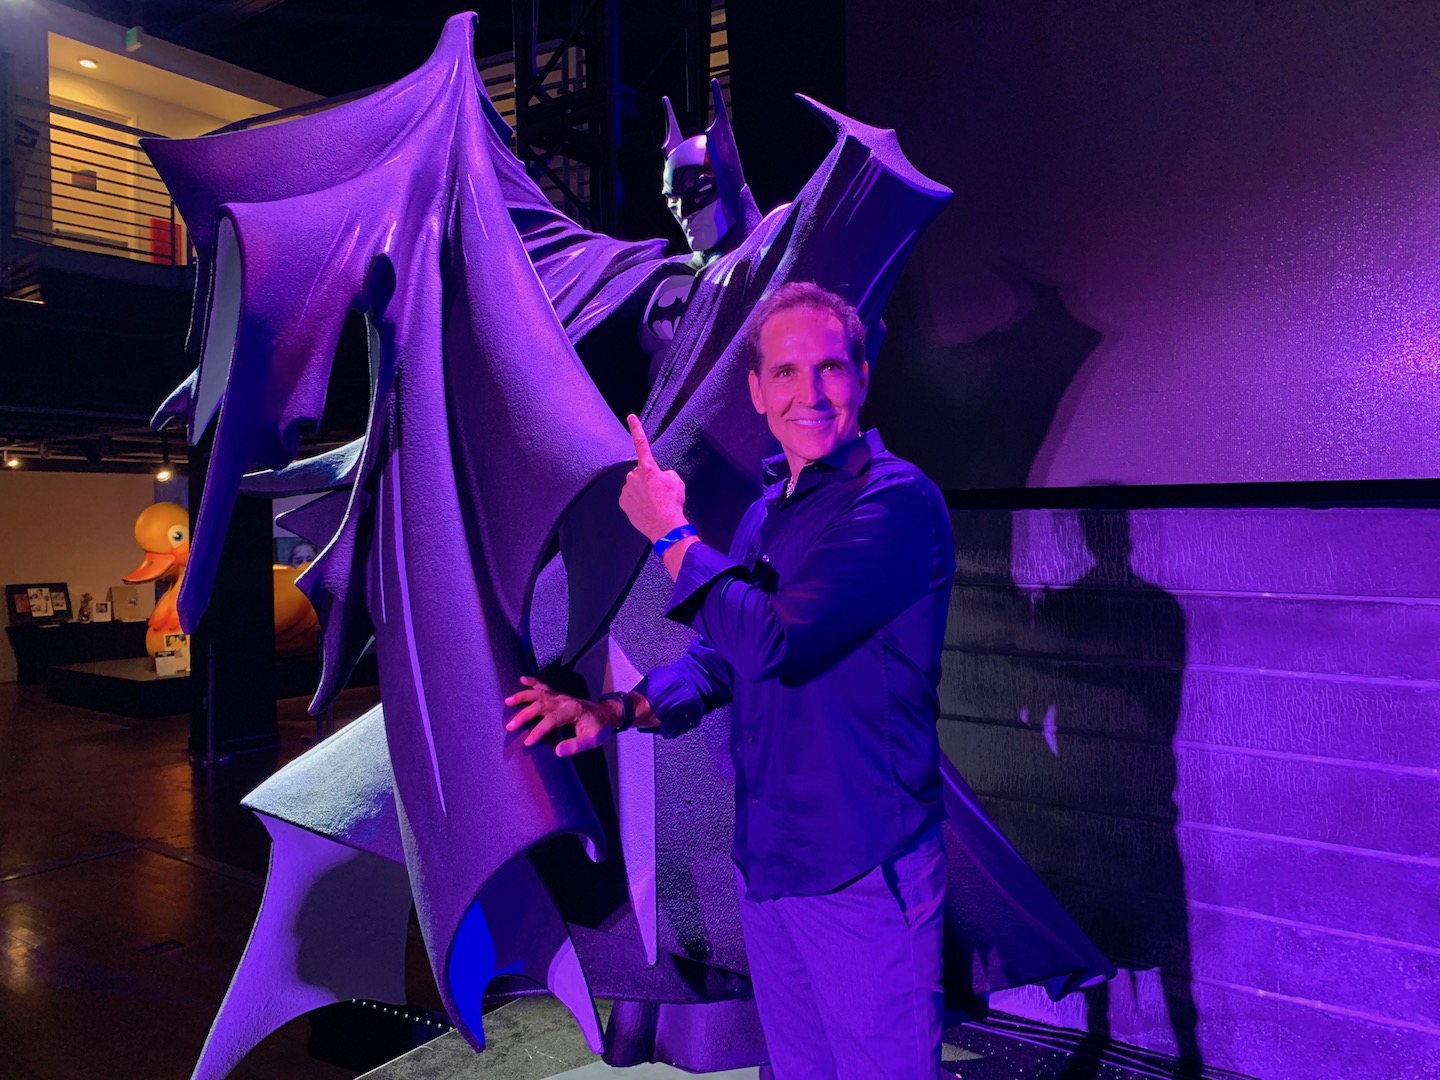 SDCC 2019: Todd McFarlane talks his Batman statue design and more at Comic-Con Museum event